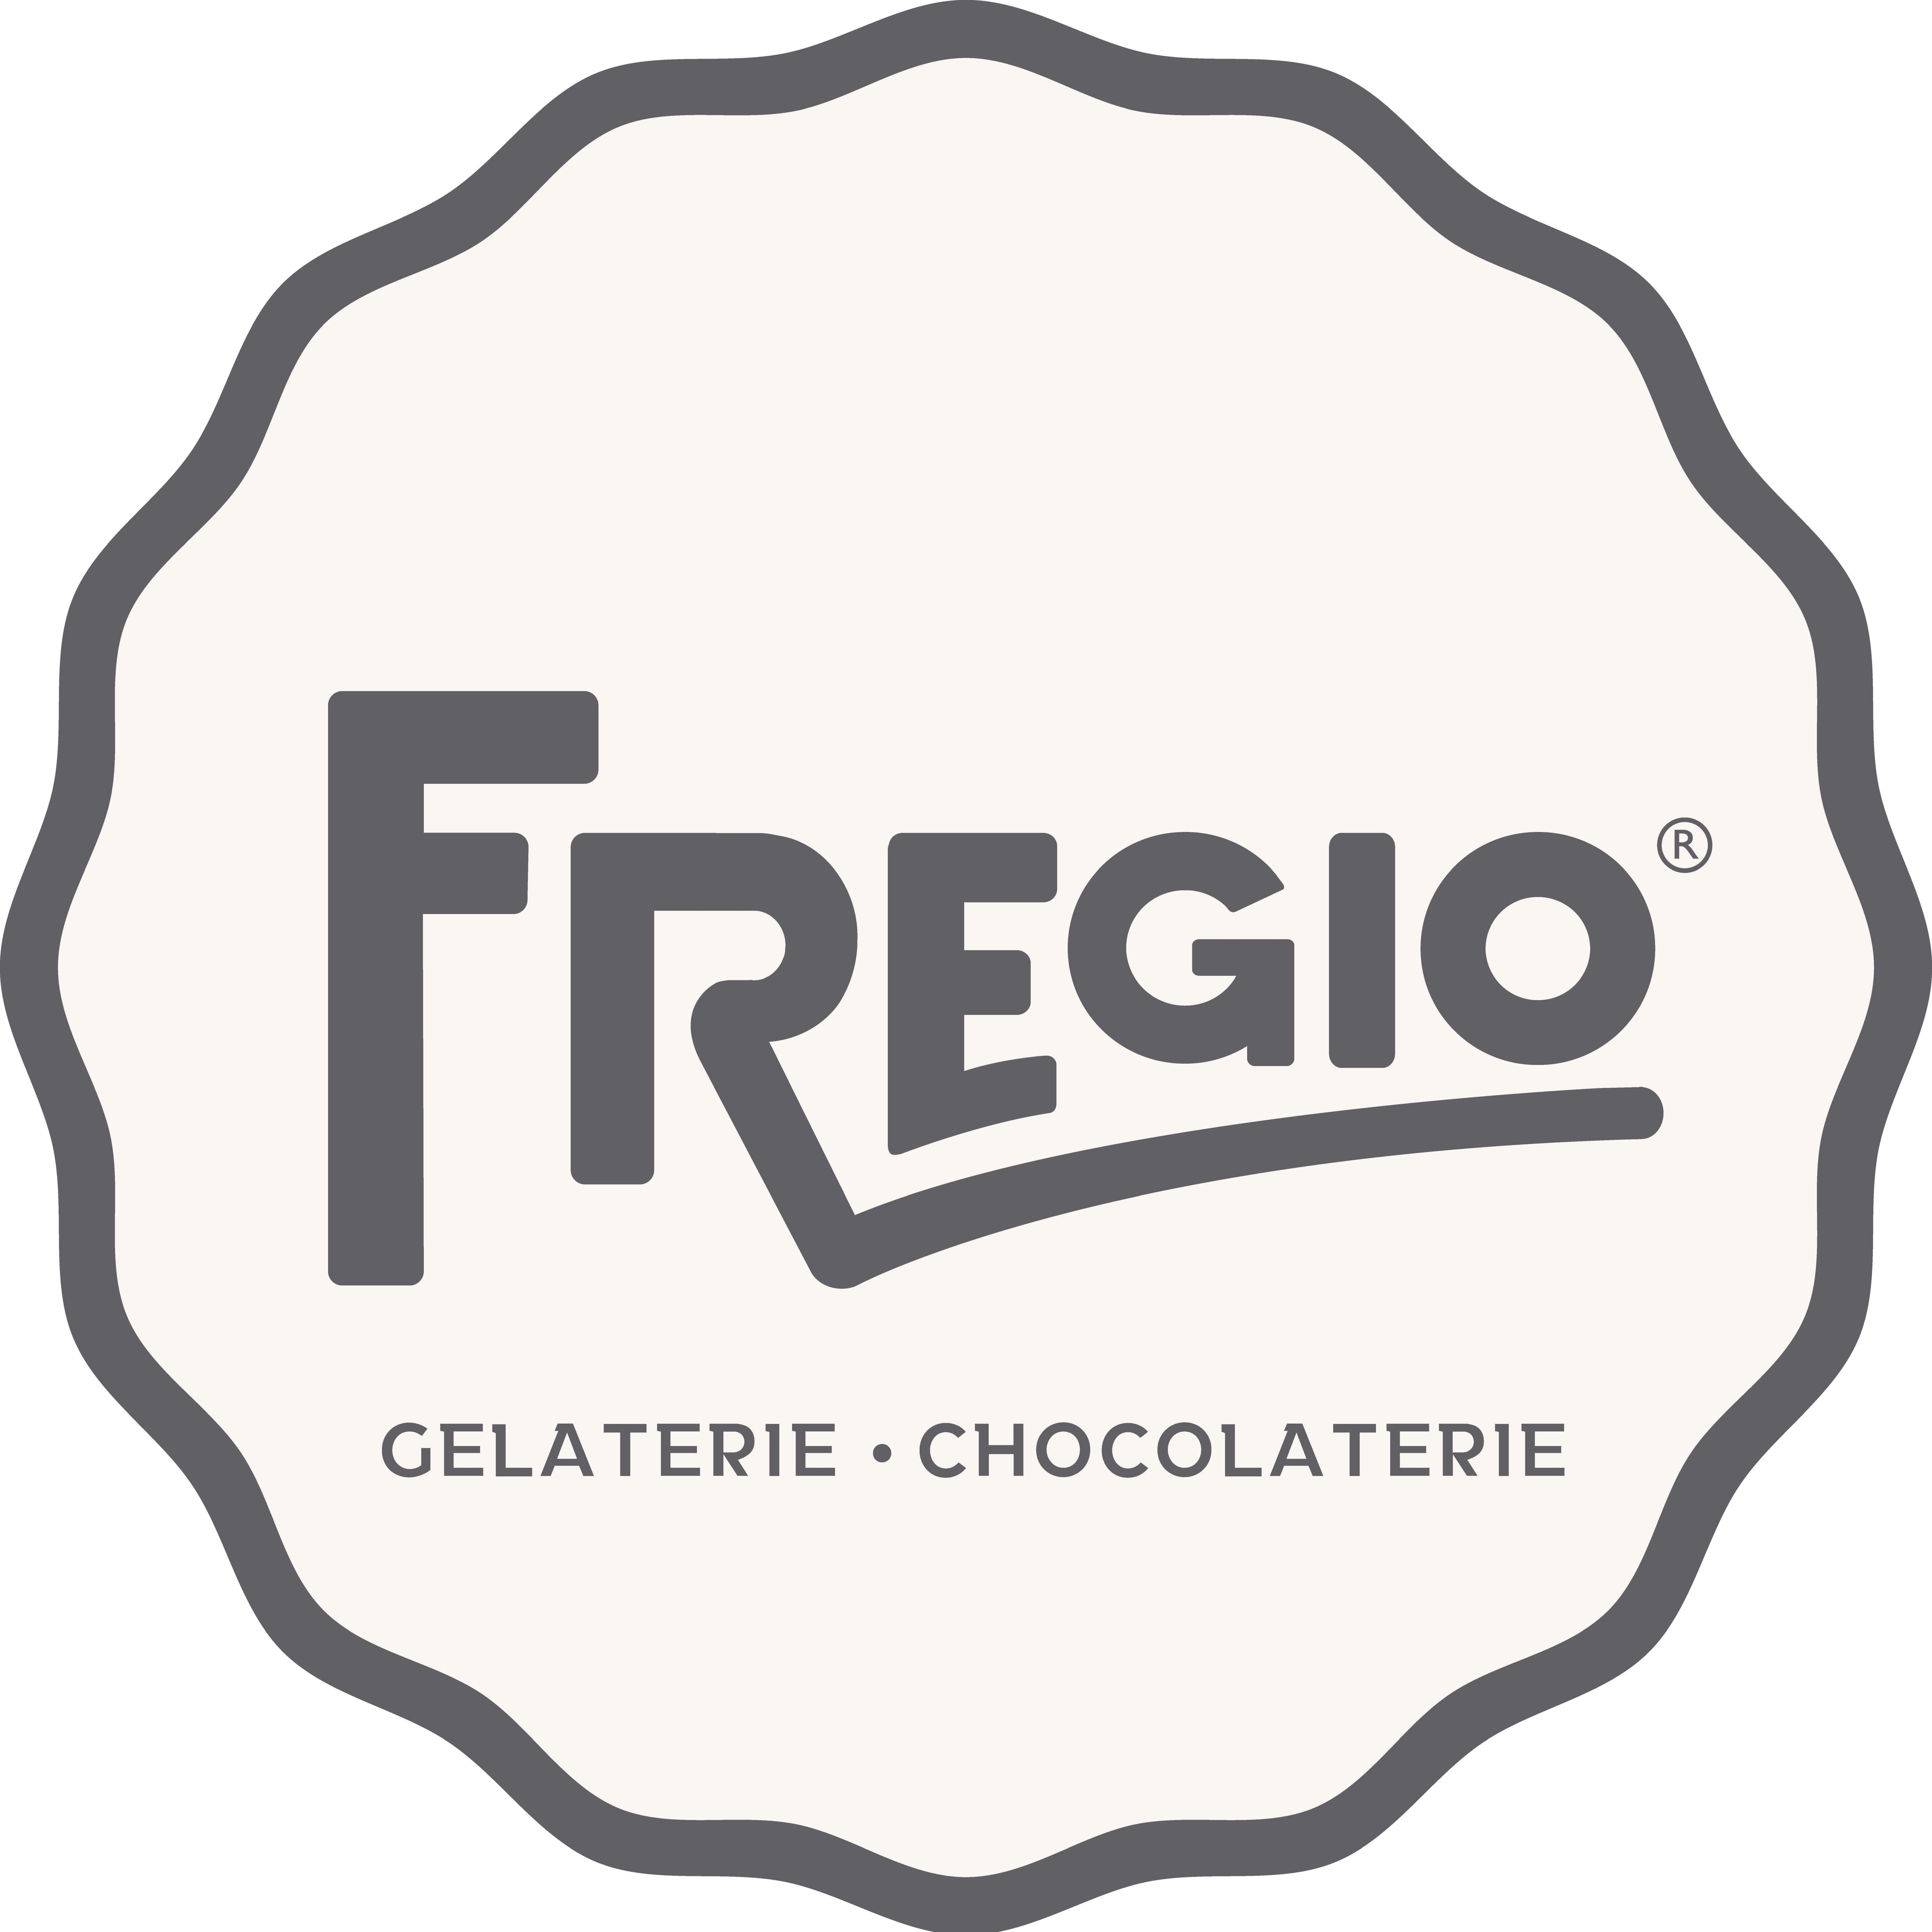 2018 FREGIO logo